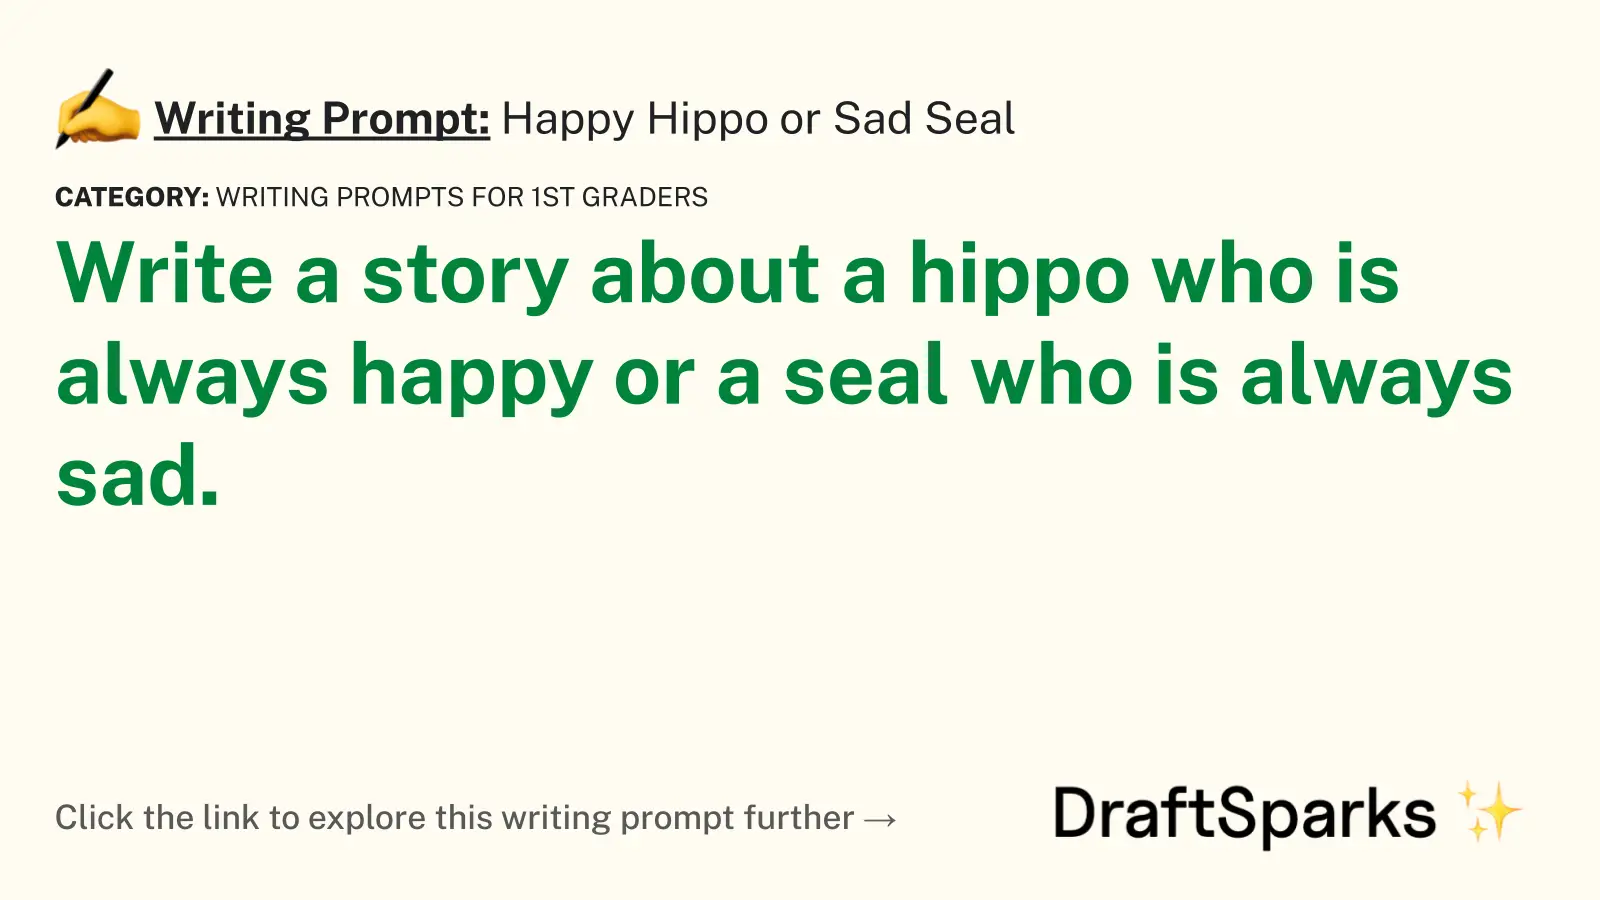 Happy Hippo or Sad Seal